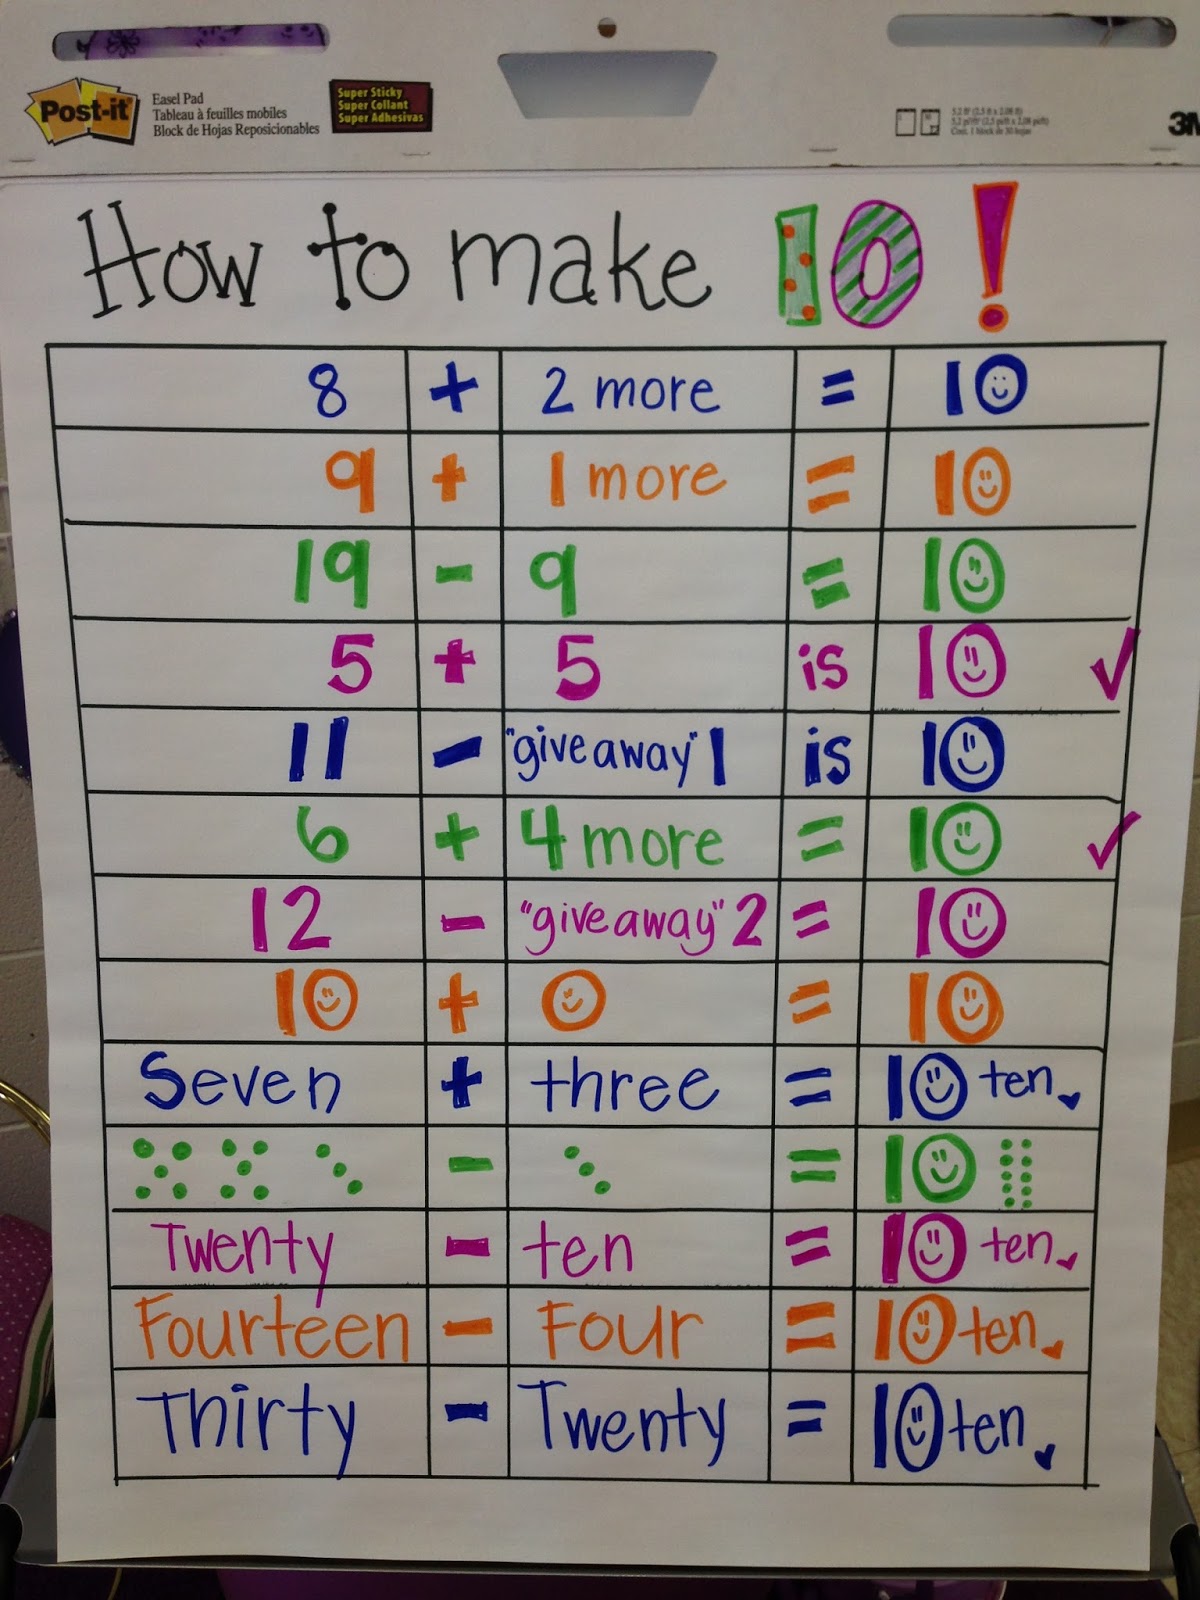 Ways To Make 10 Anchor Chart